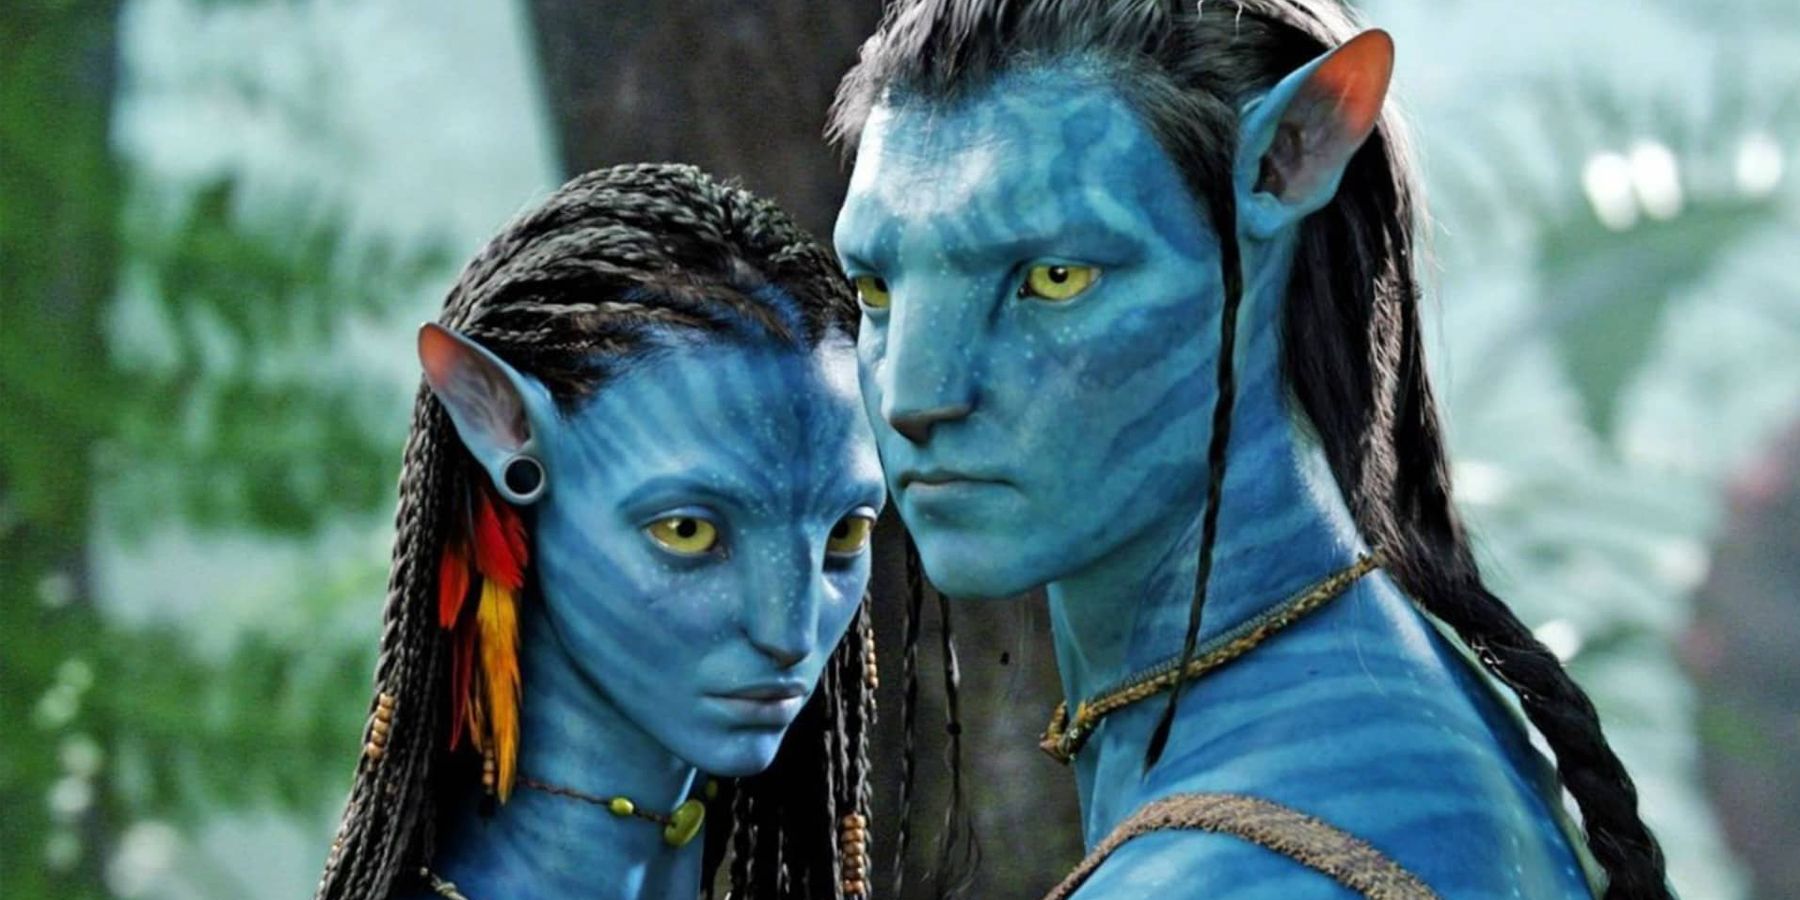 Jake and Neytiri on Pandora in Avatar